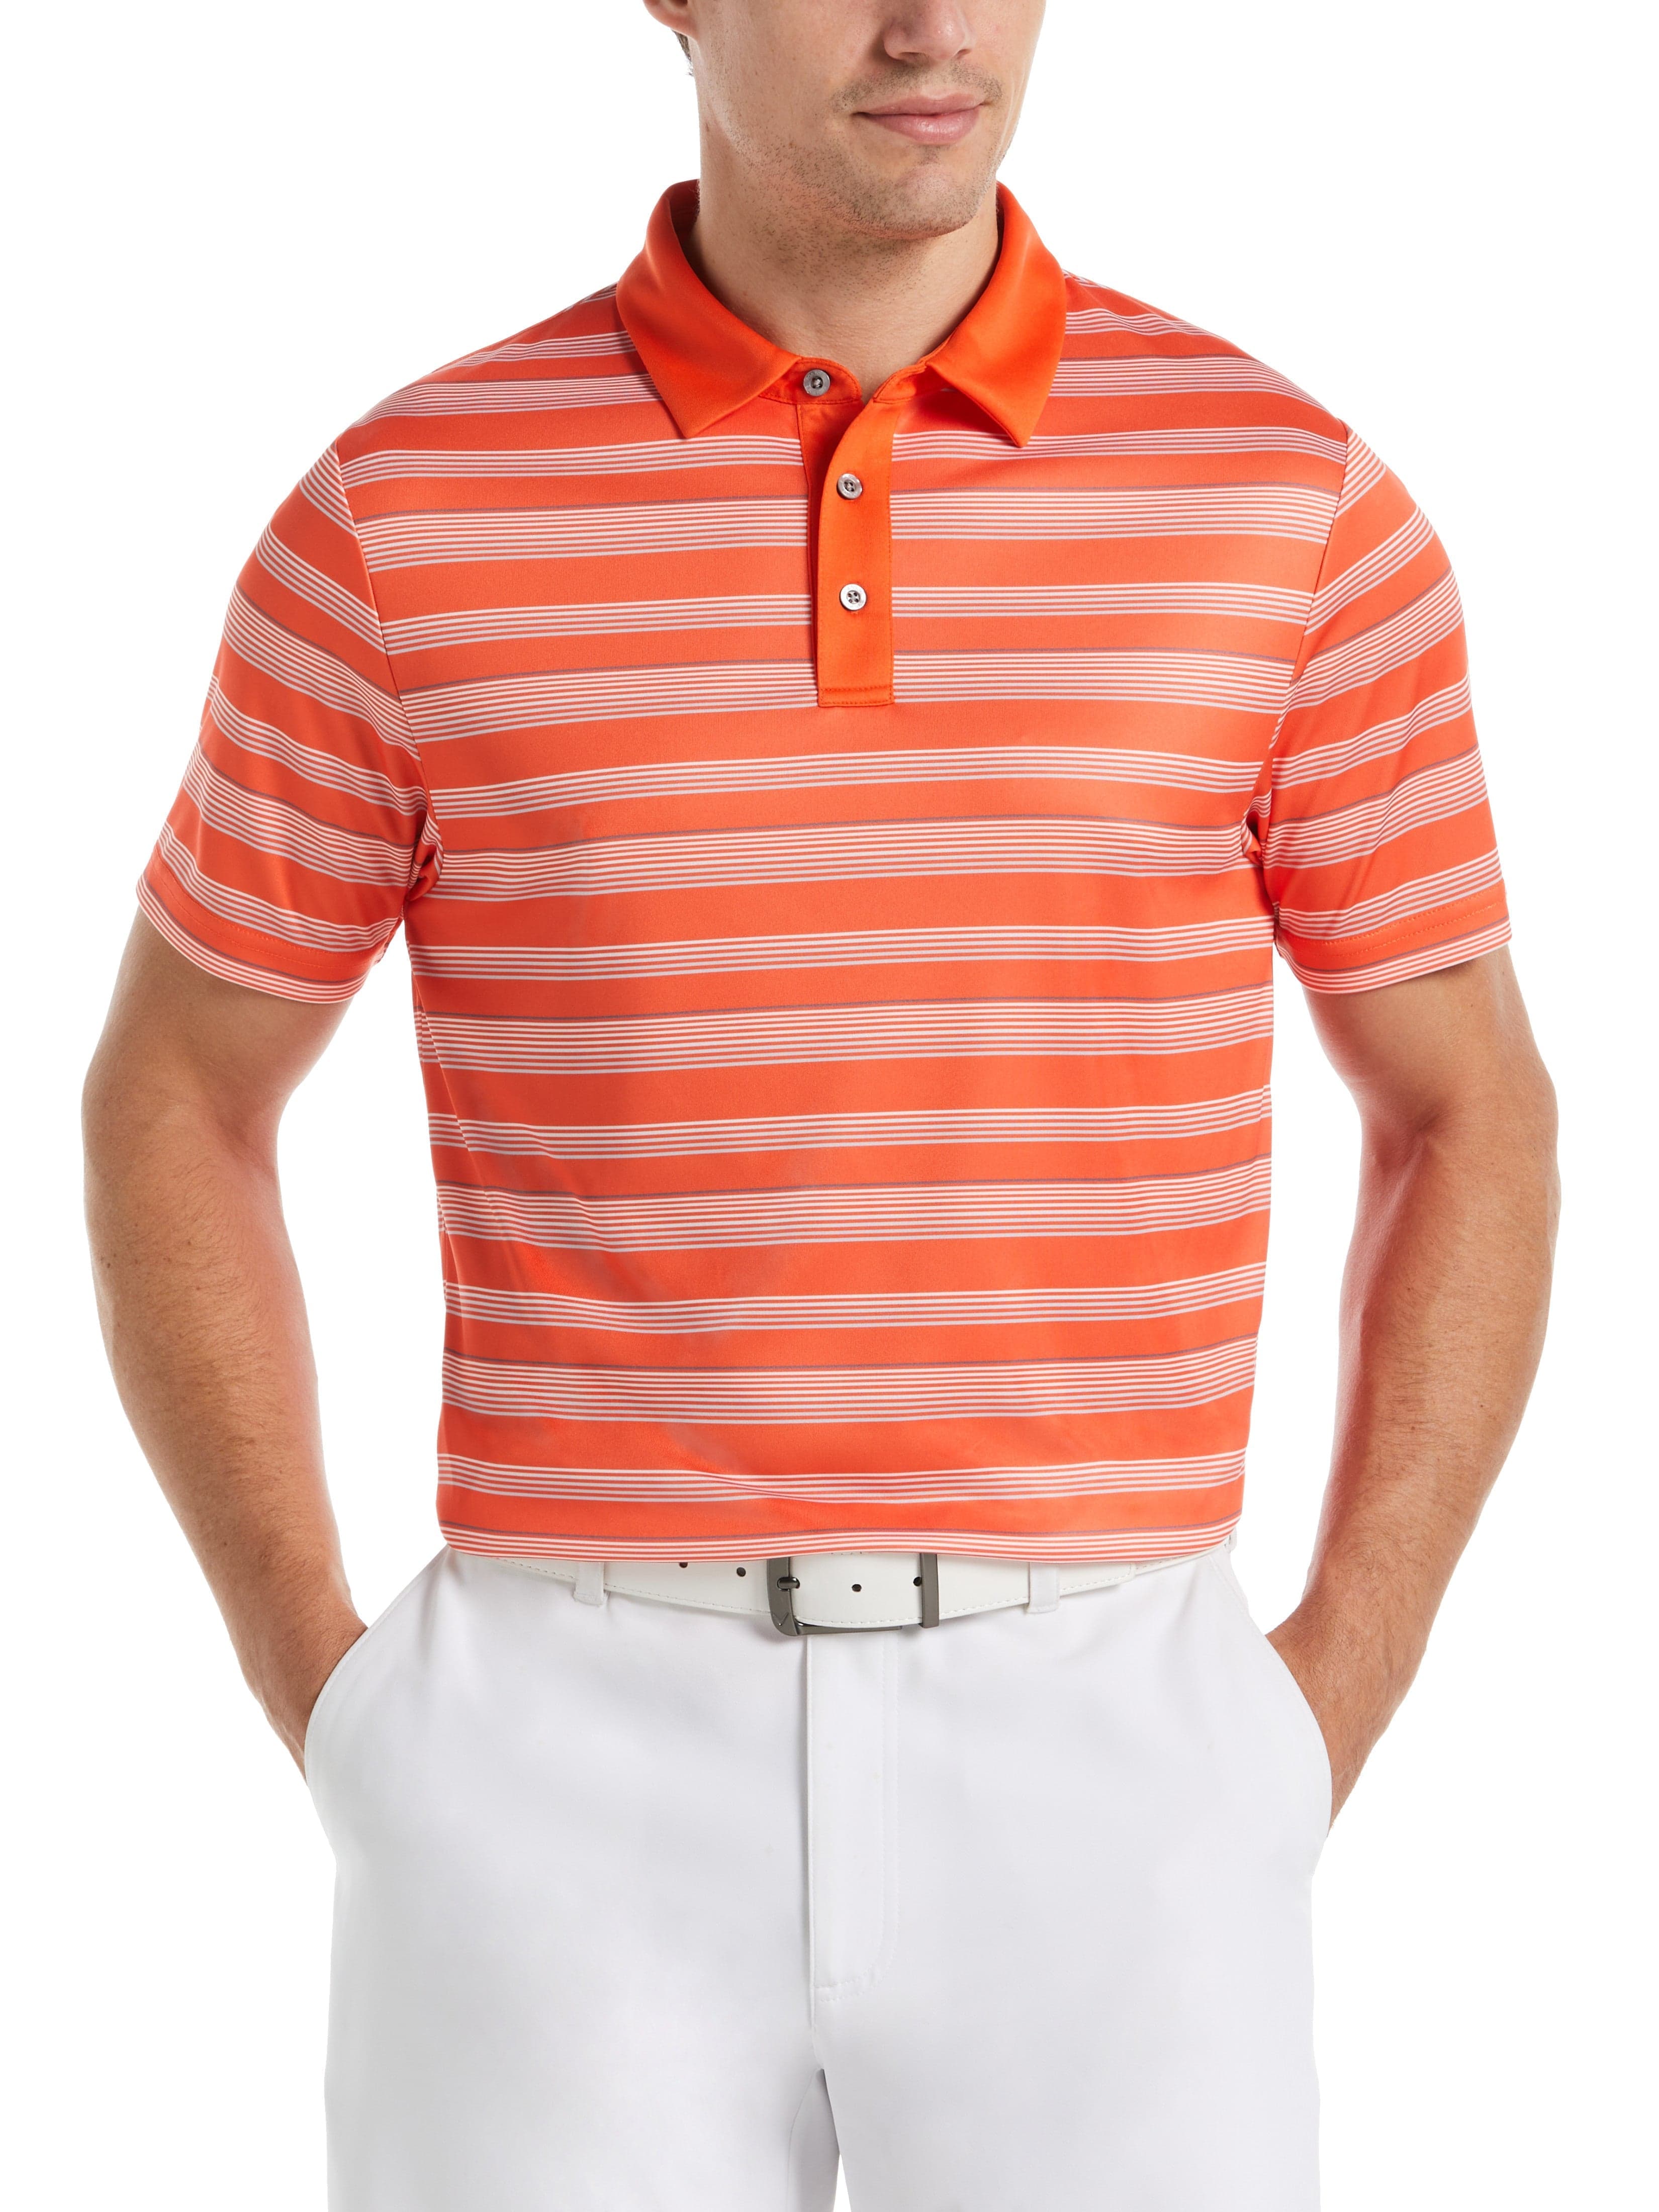 PGA TOUR Apparel Mens Allover Energy Stripe Golf Polo Shirt, Size Small, Vermillion Orange, 100% Polyester | Golf Apparel Shop